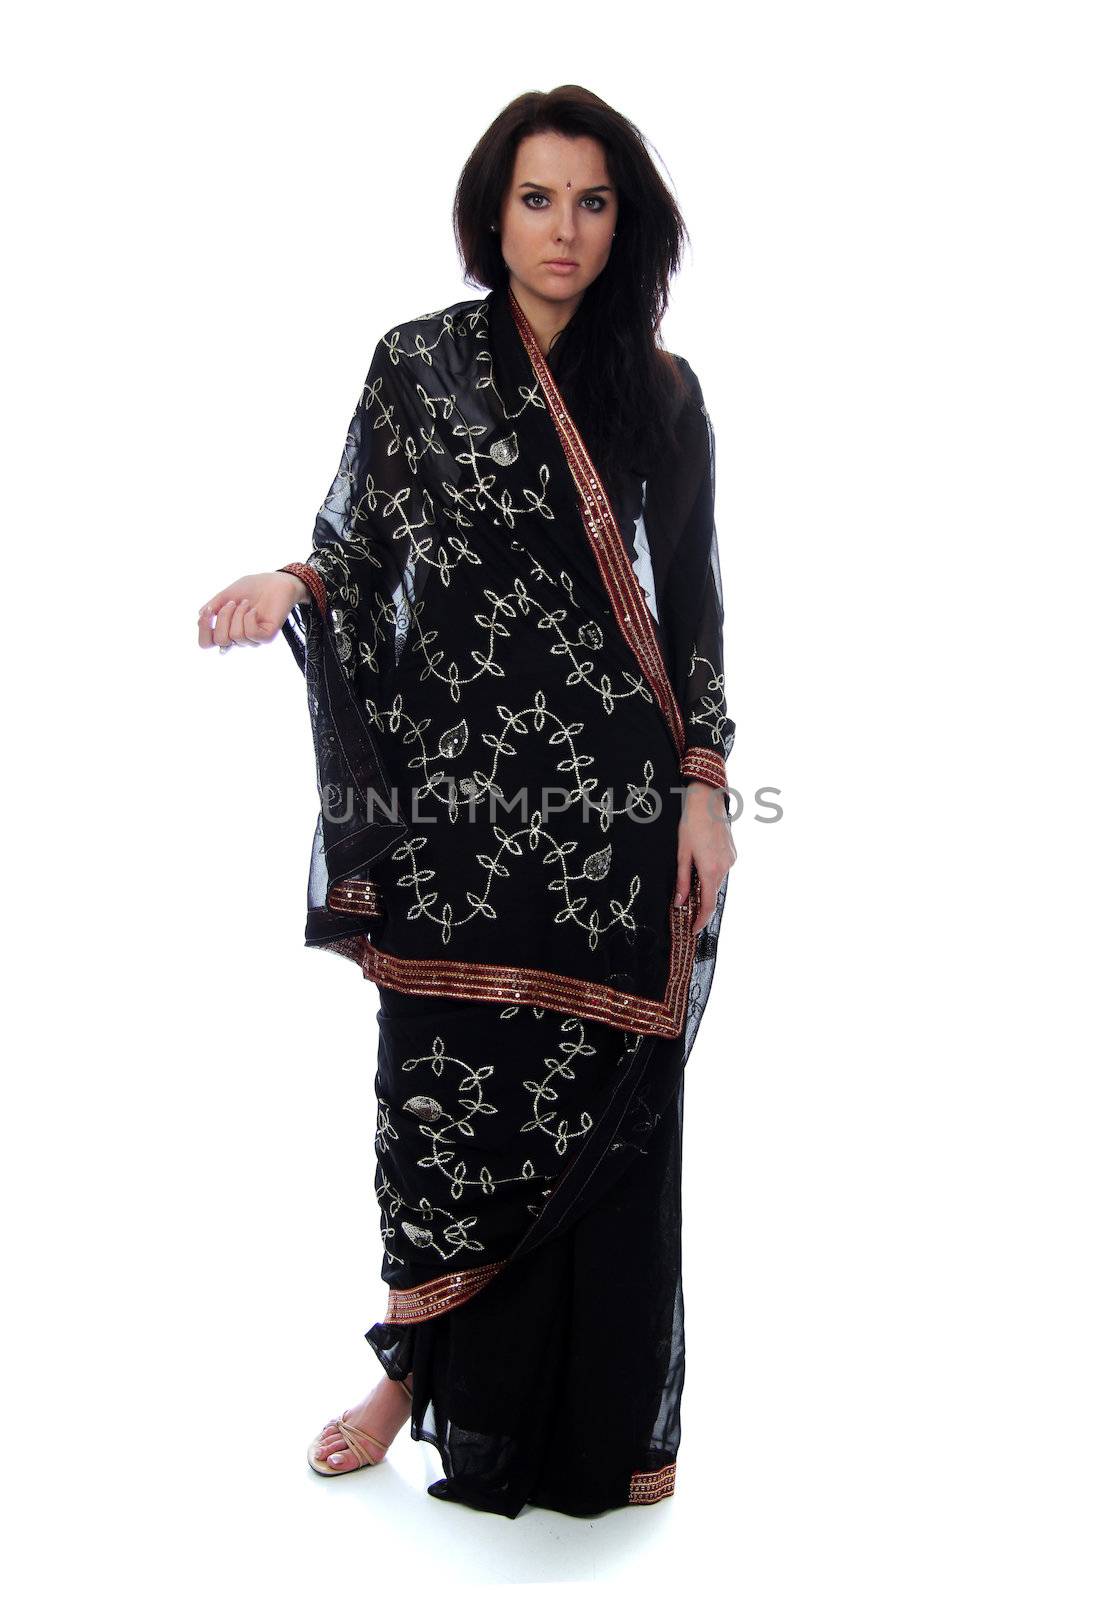 Young pretty woman in indian sari dress